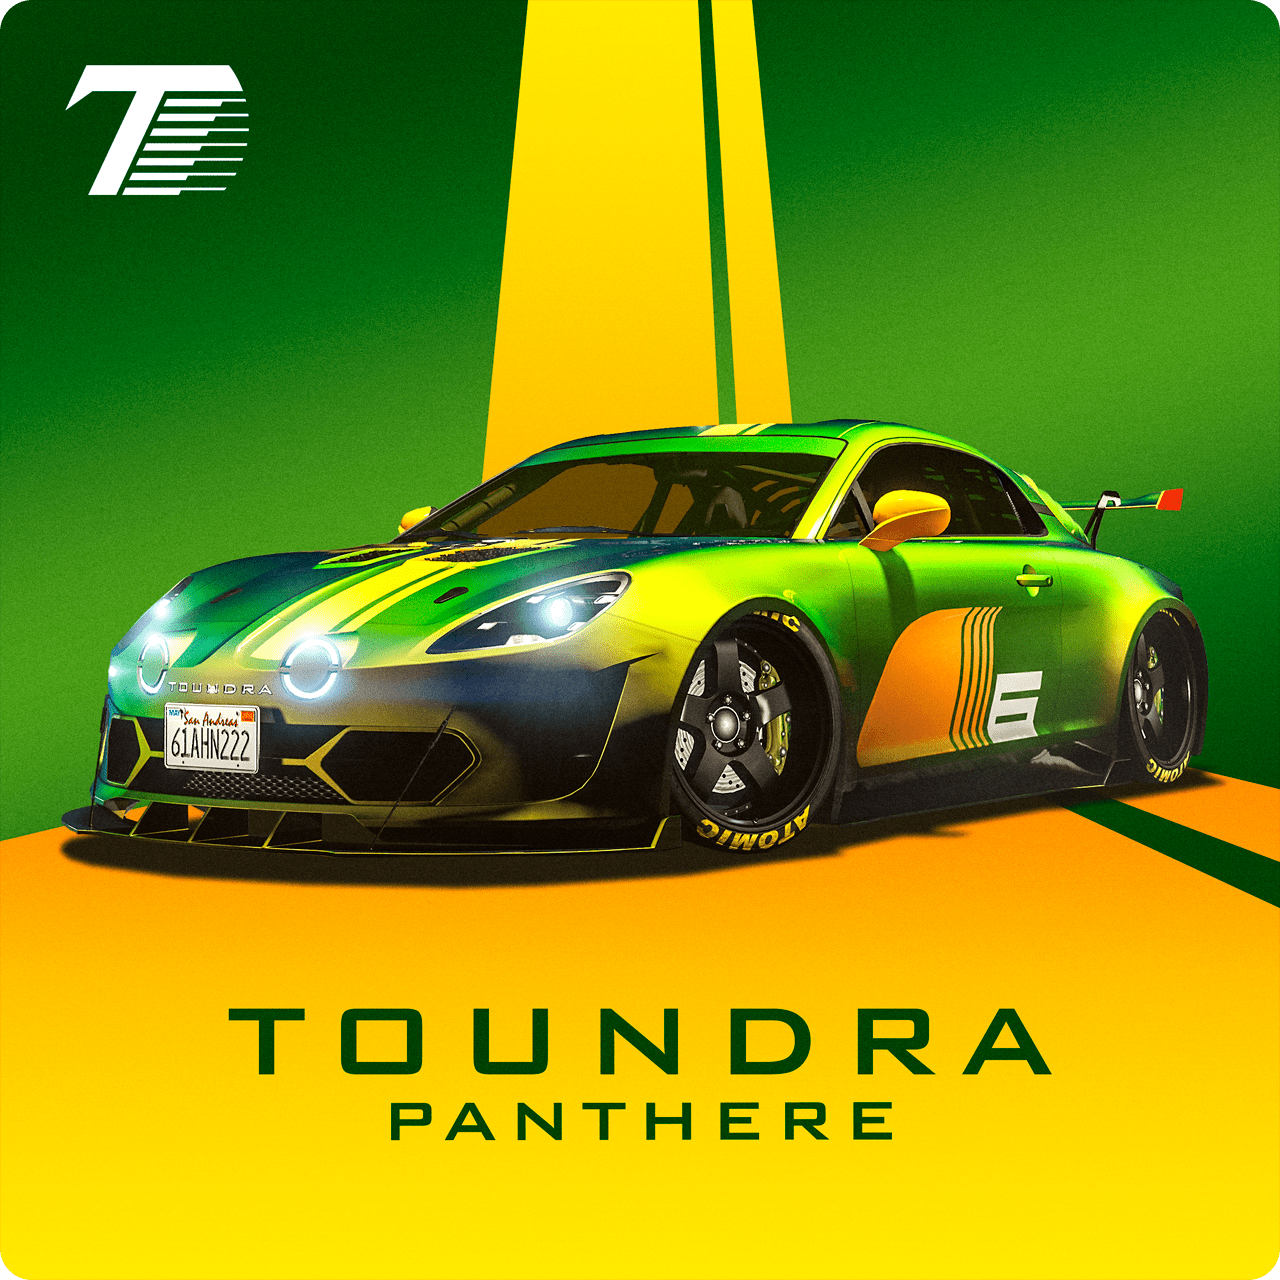 Image of Green Toundra Panthere Sports Car